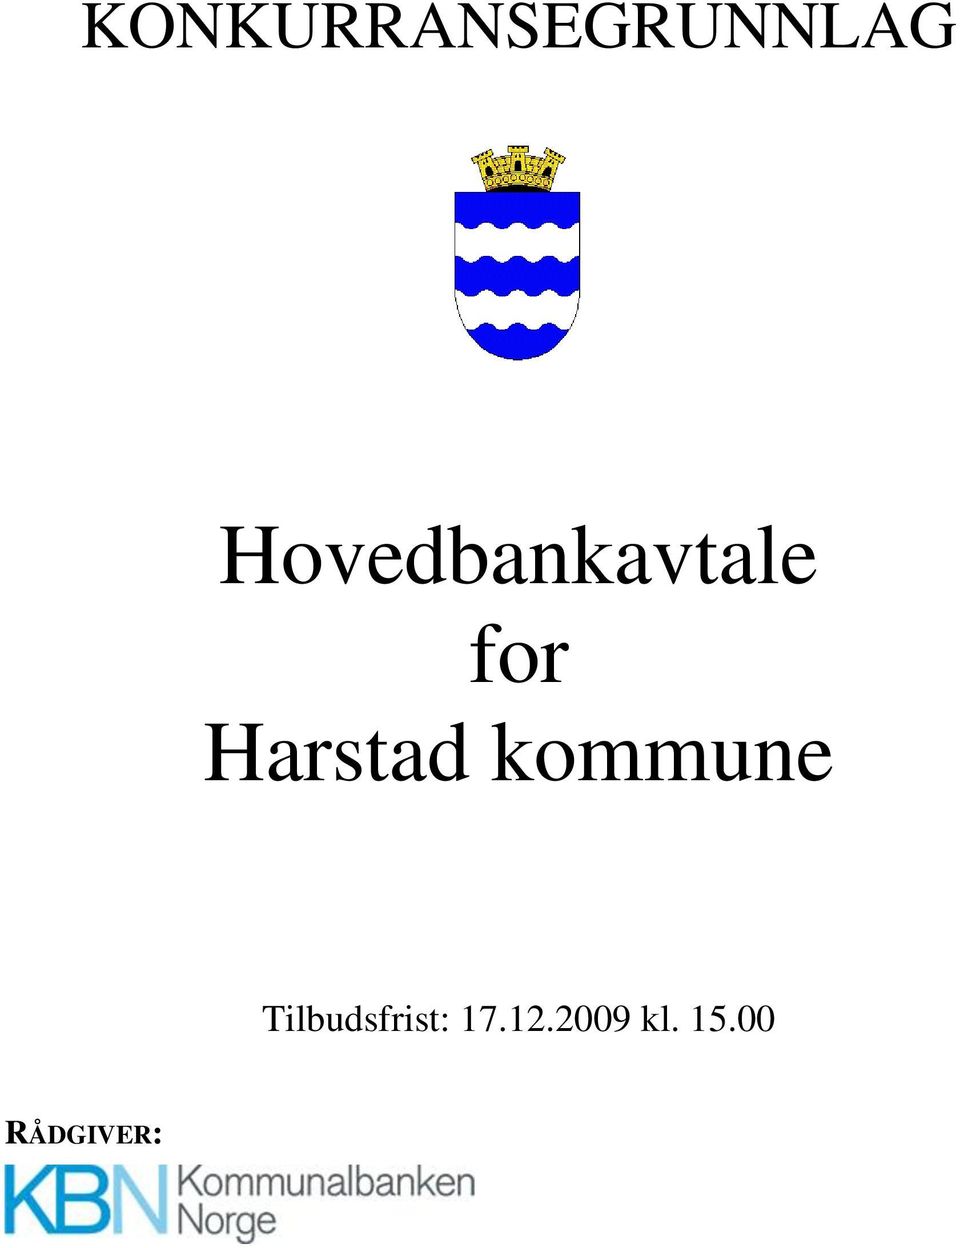 Harstad kommune